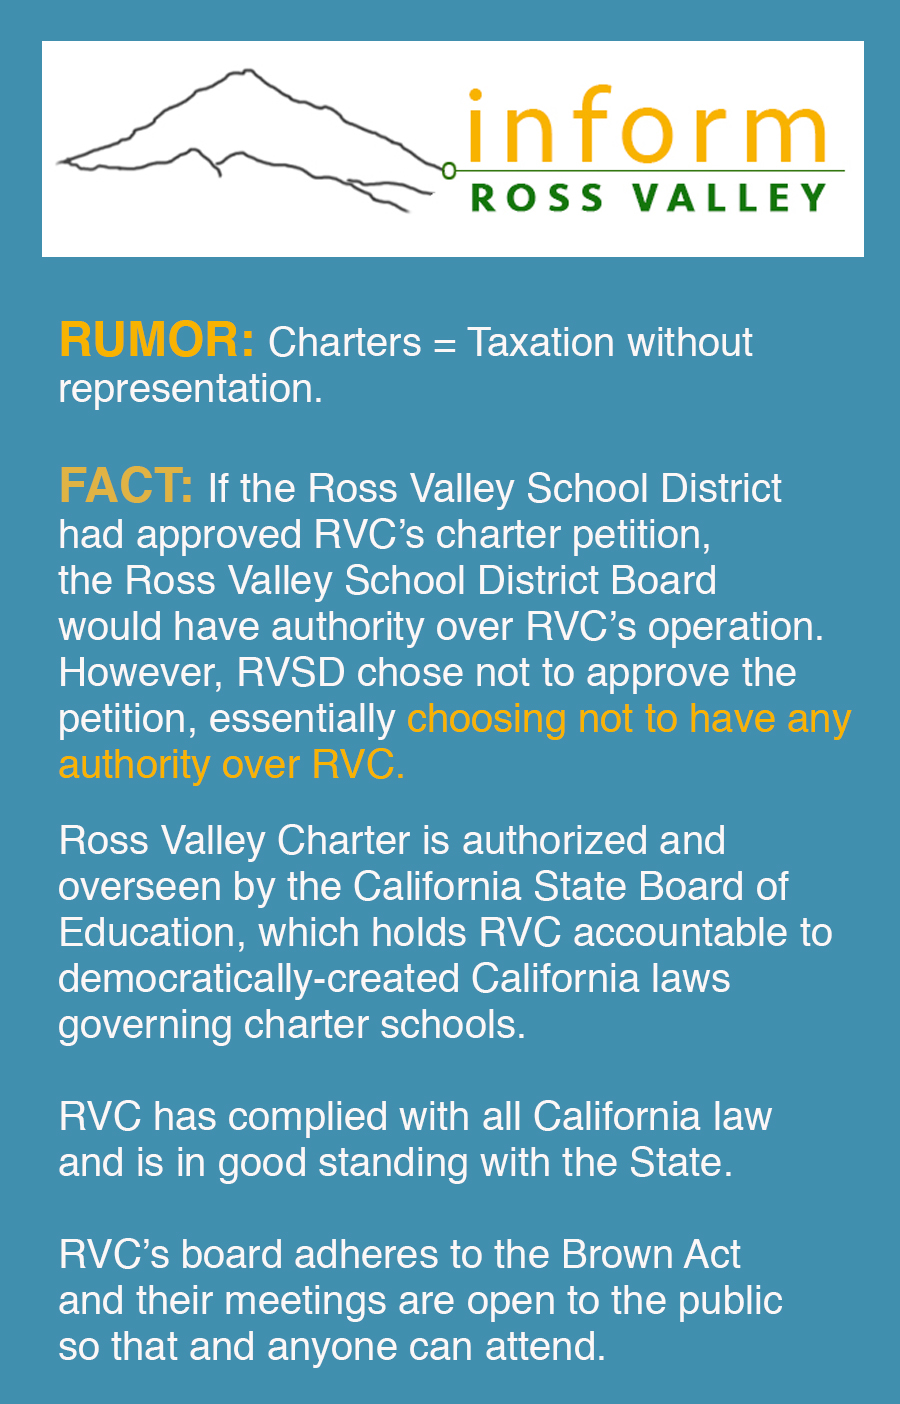 Infographic describing Ross Valley Charter's democratic roots